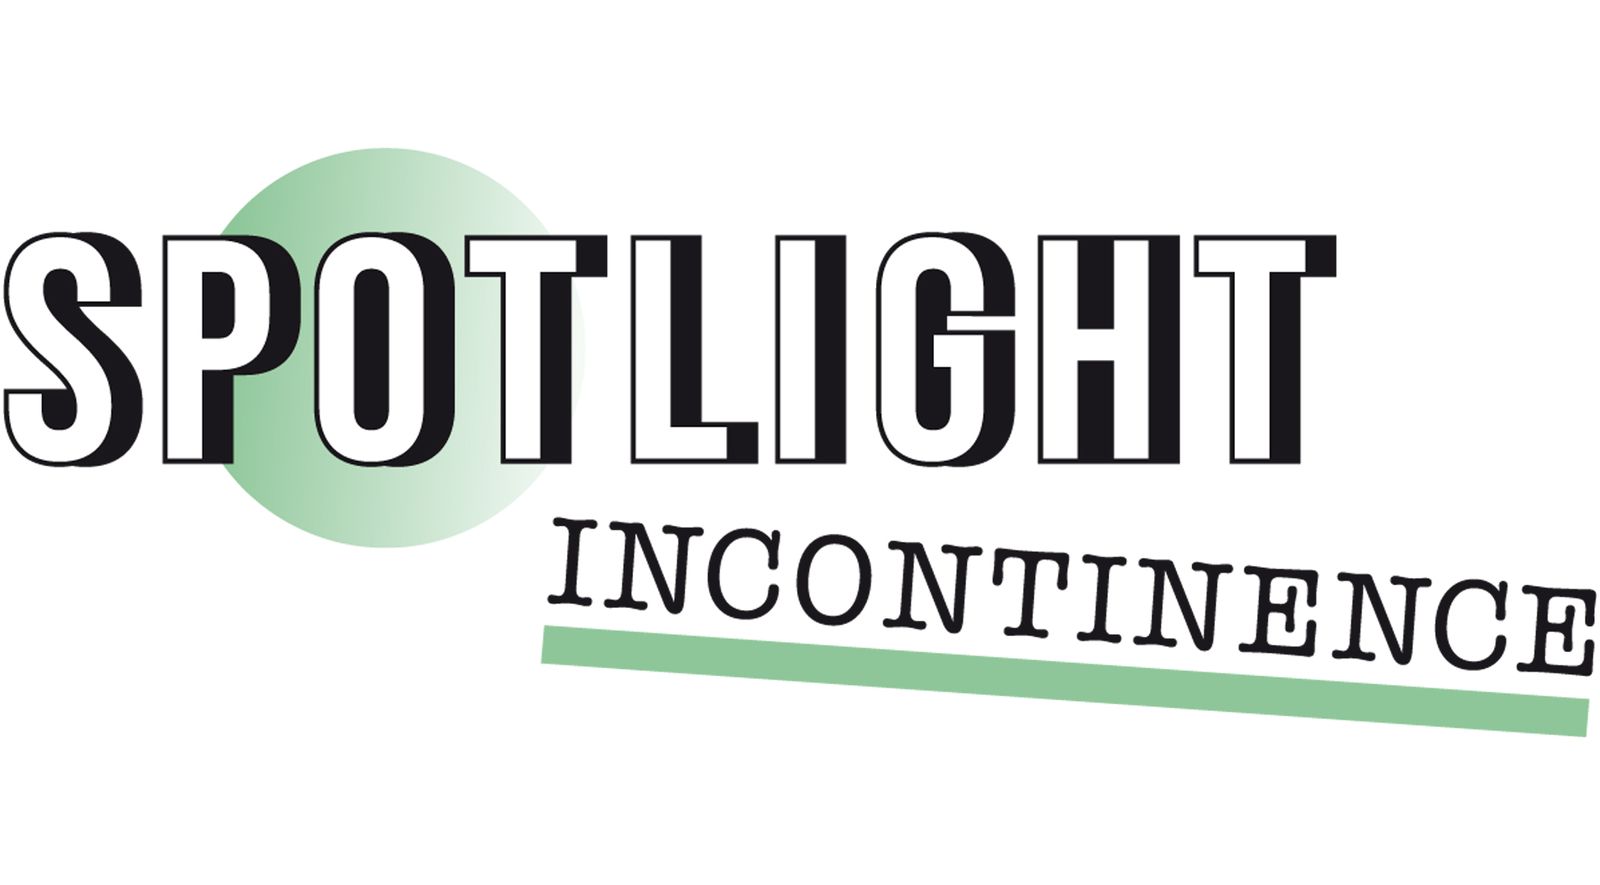 „Spotlight incontinence“ – voyager : préparation et organisation